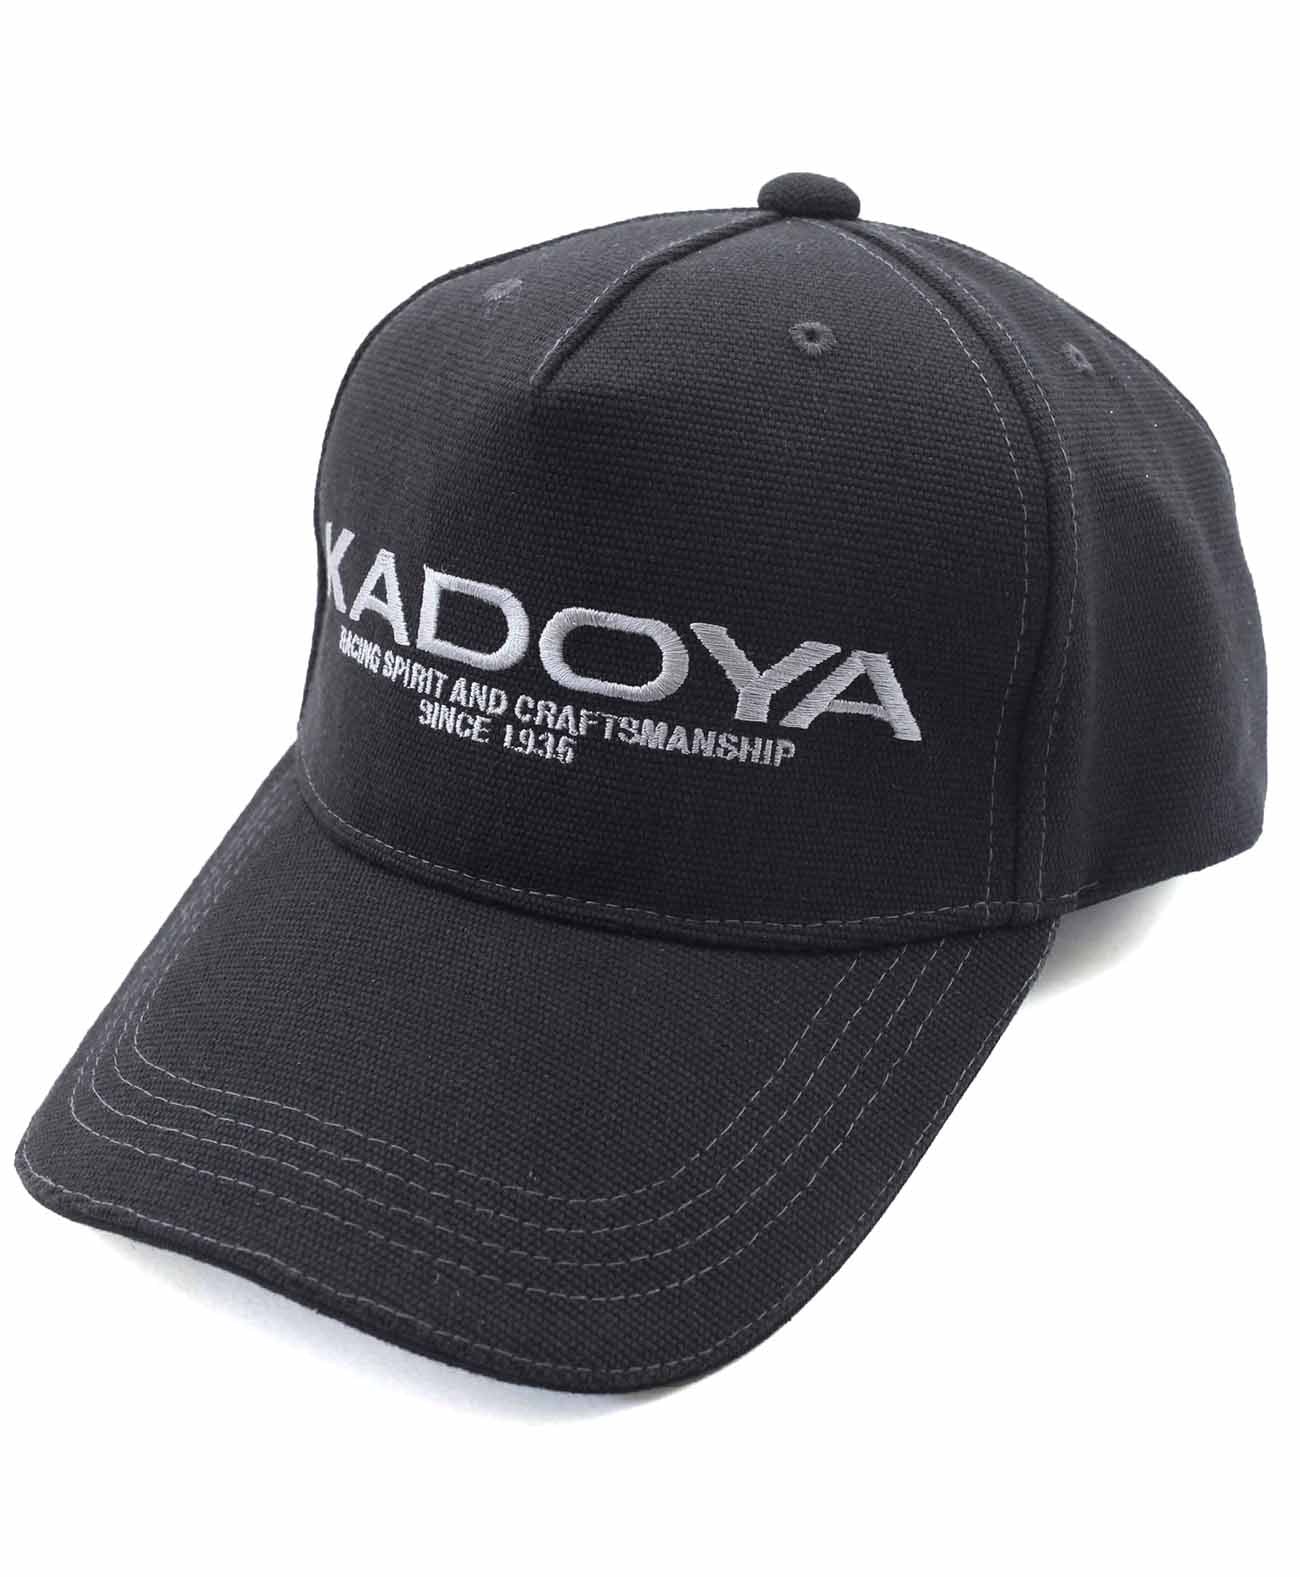 Kadoya Logo Cap / Schwarz / Grau